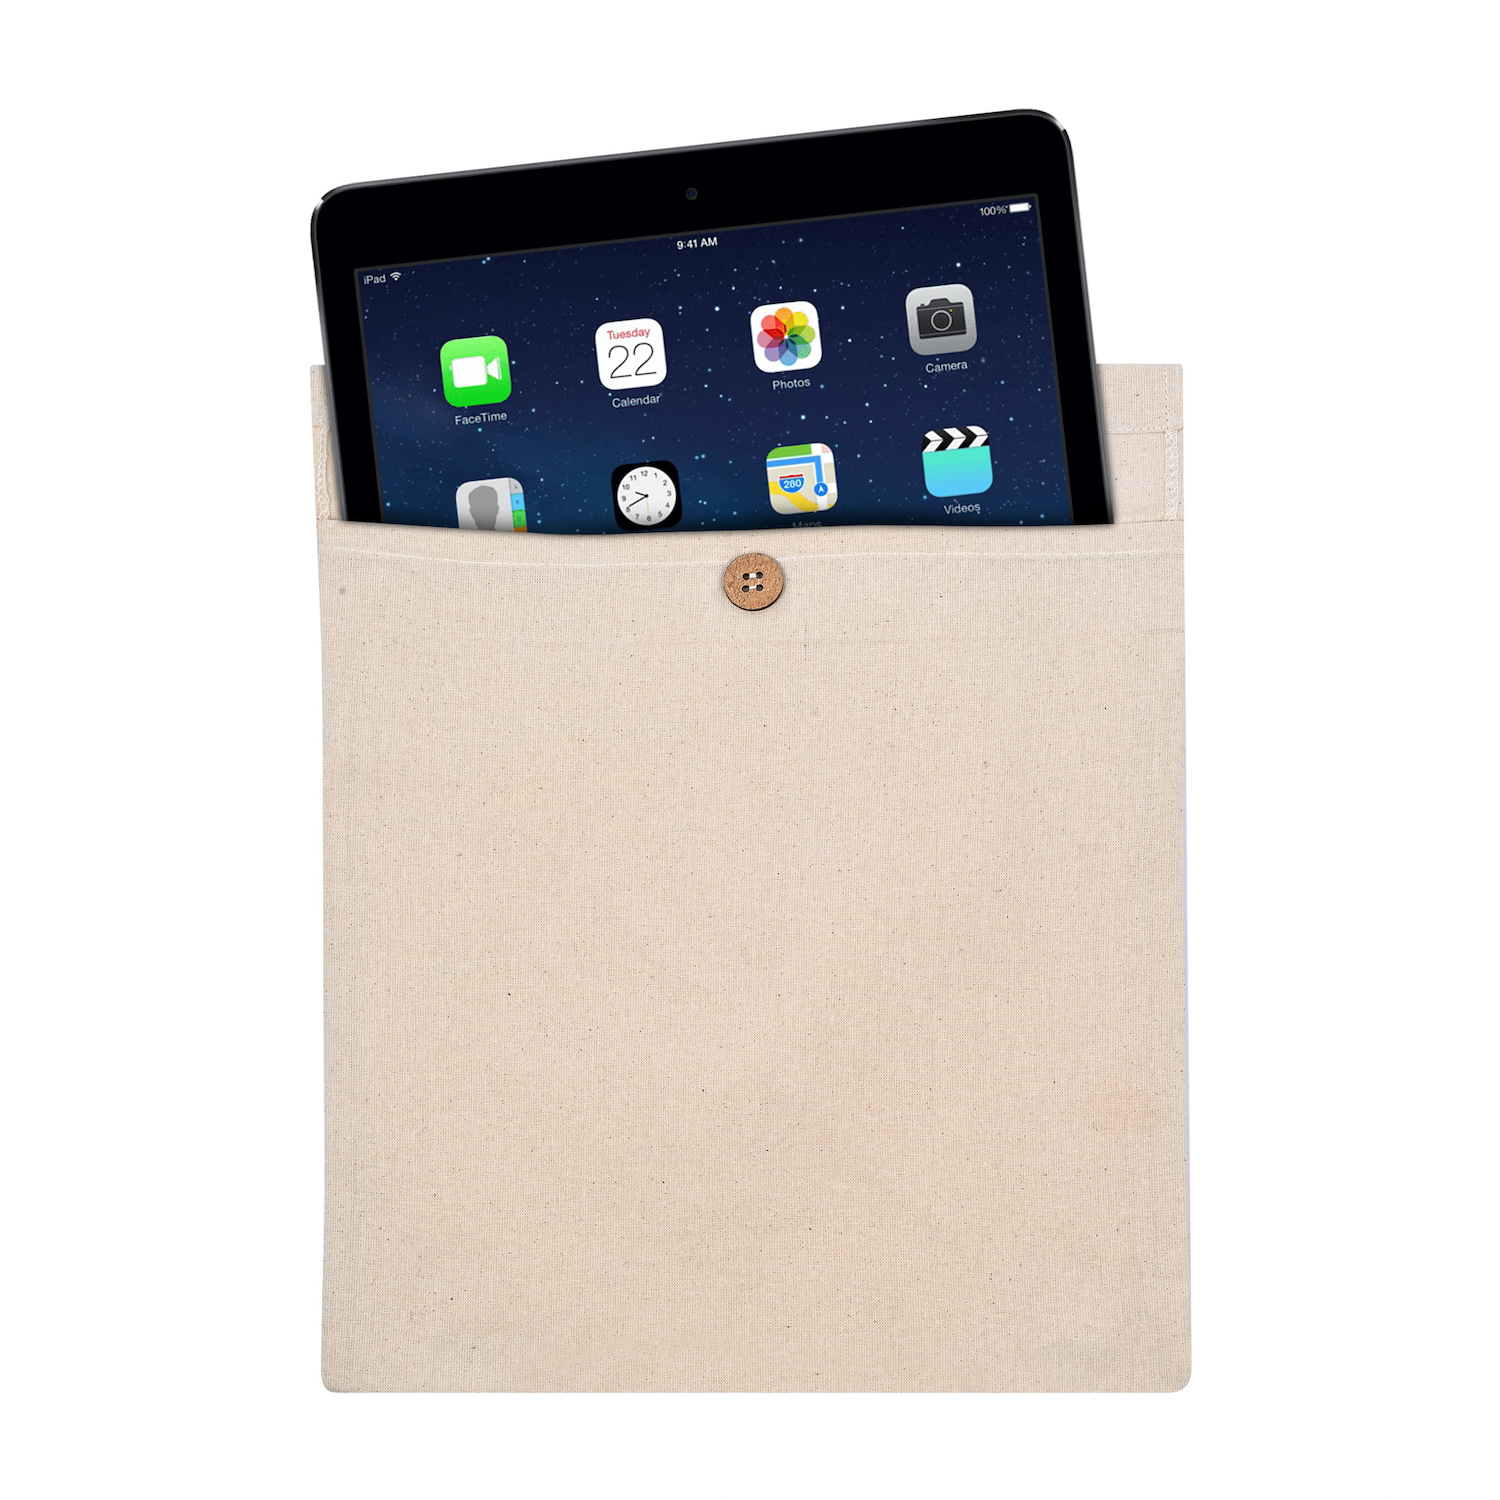 iPad Air (2020) and iPad Pro 11